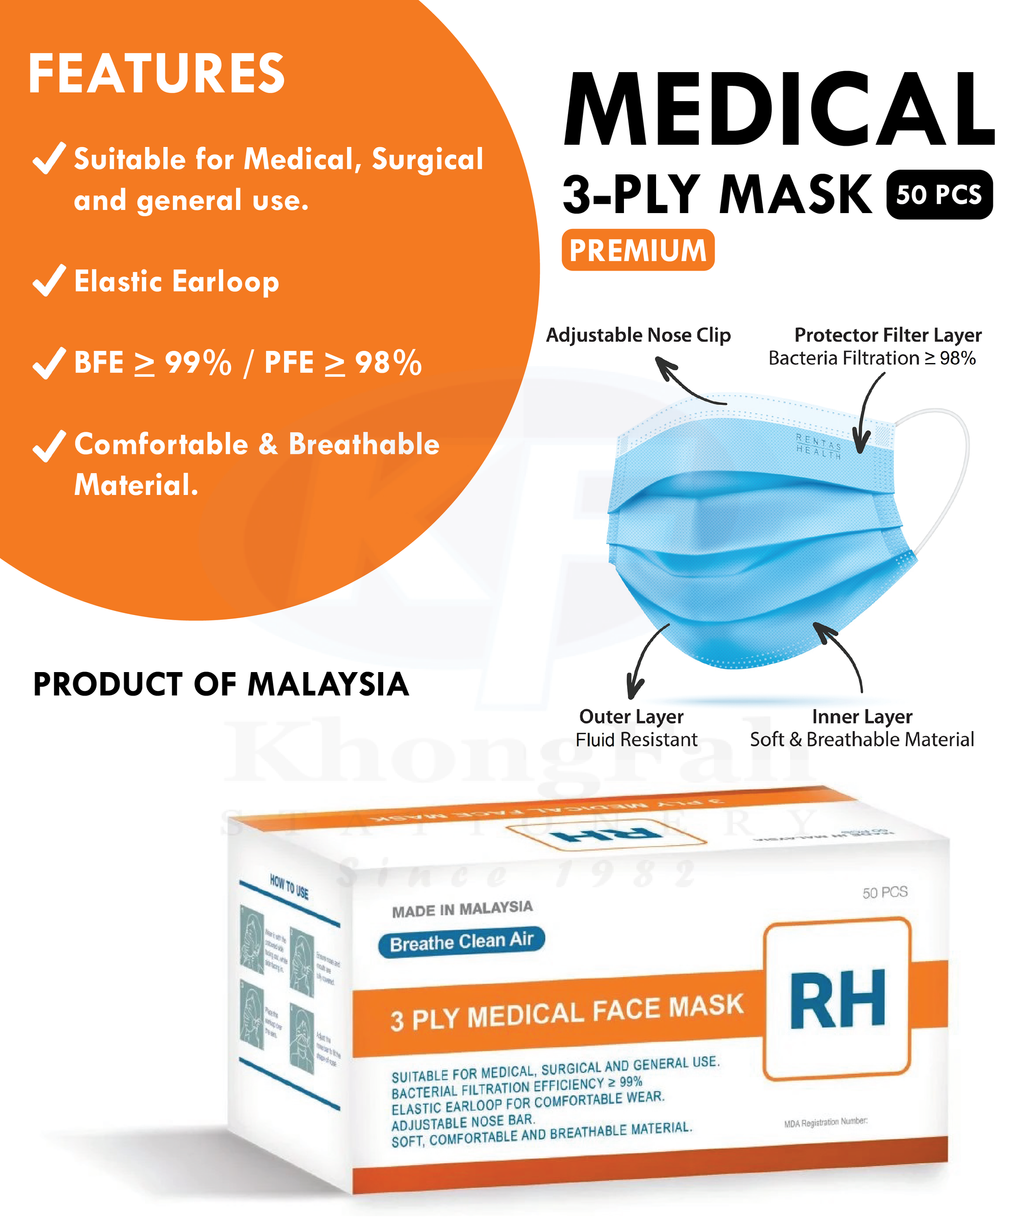 RH Medical Mask adv-01.png